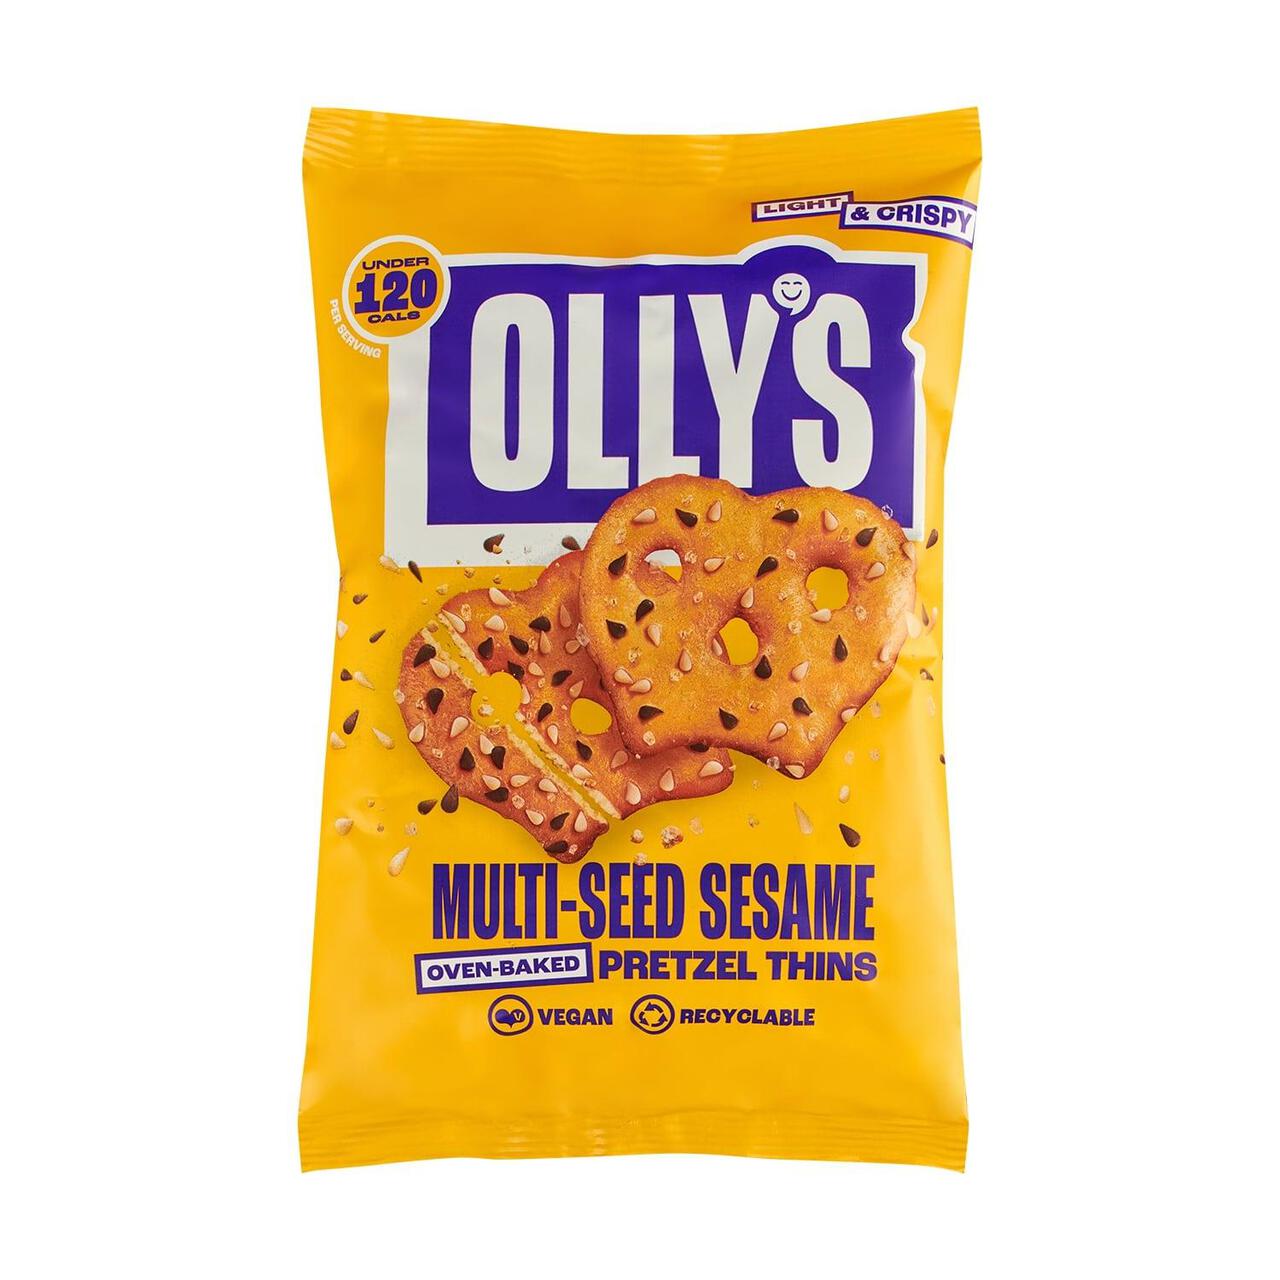 Olly's Pretzel Thins - Multi-Seed Sesame 140g